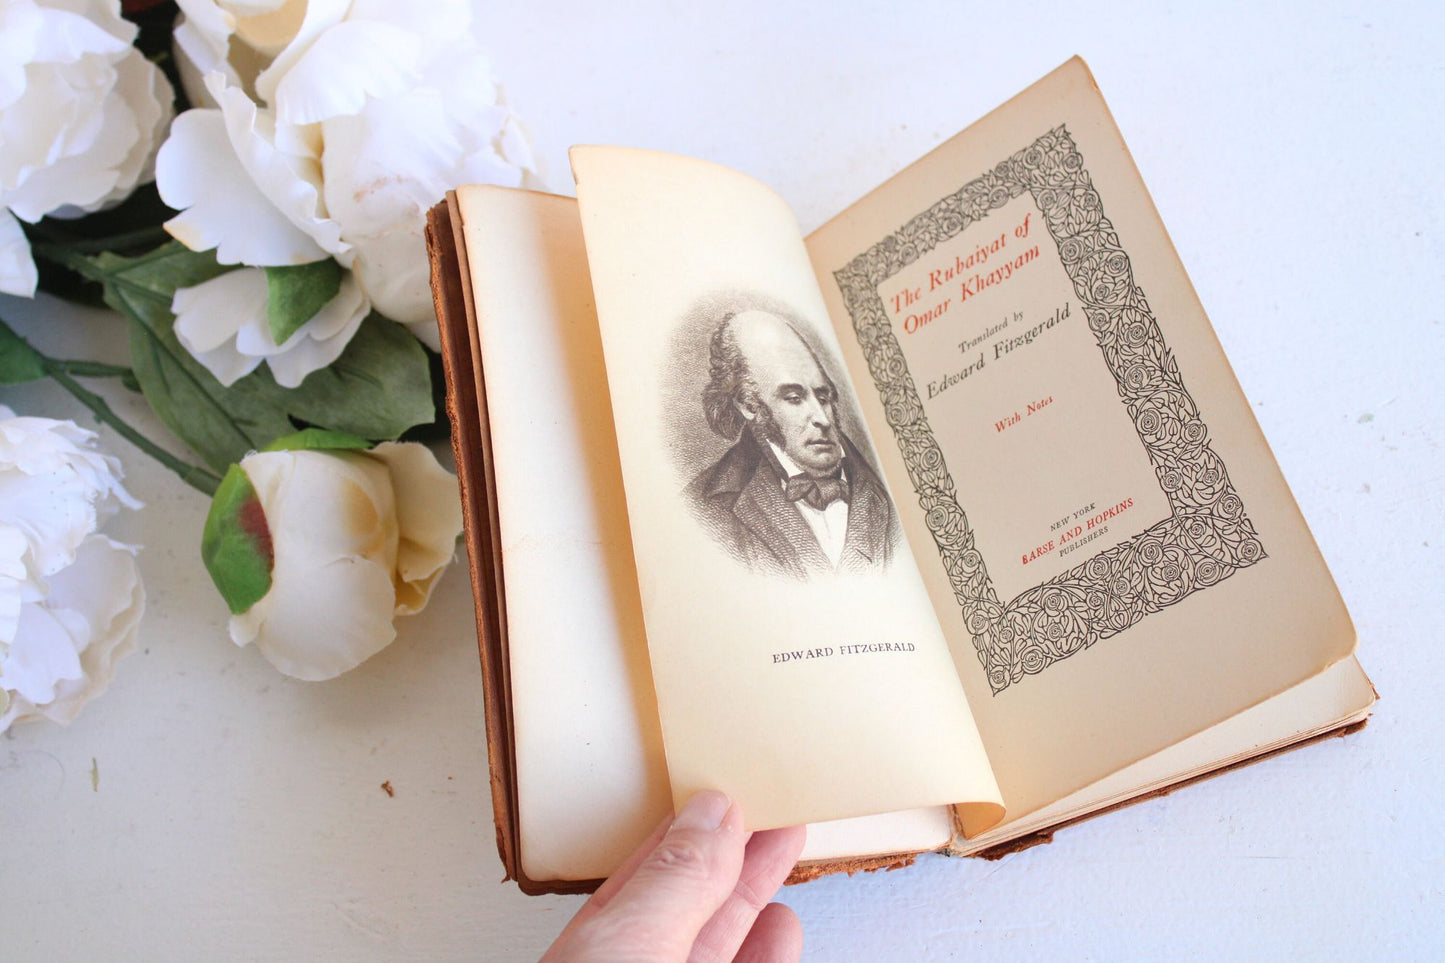 Vintage 1910s Book, "The Rubaiyat of Omar Khayyam" Edward Fitzgerald